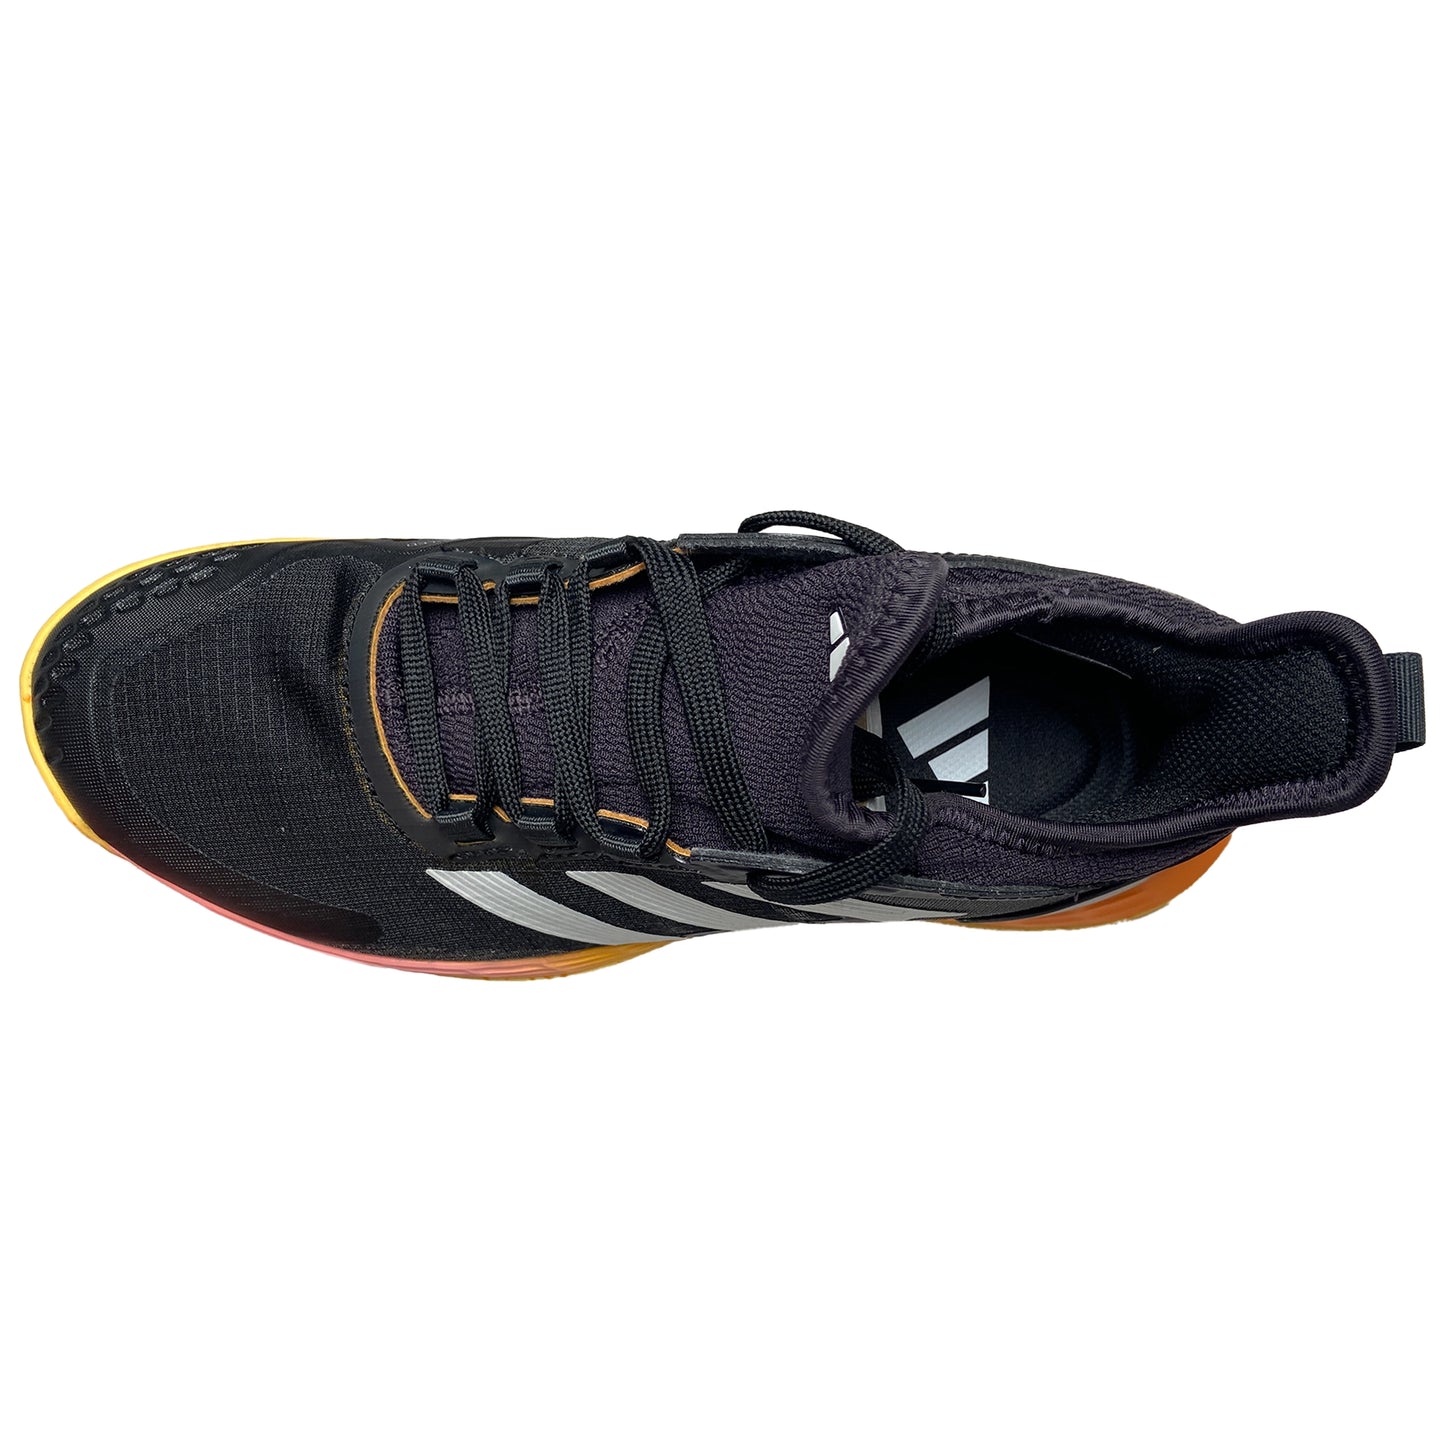 Adidas Men's Adizero Ubersonic 4.1 IF0446